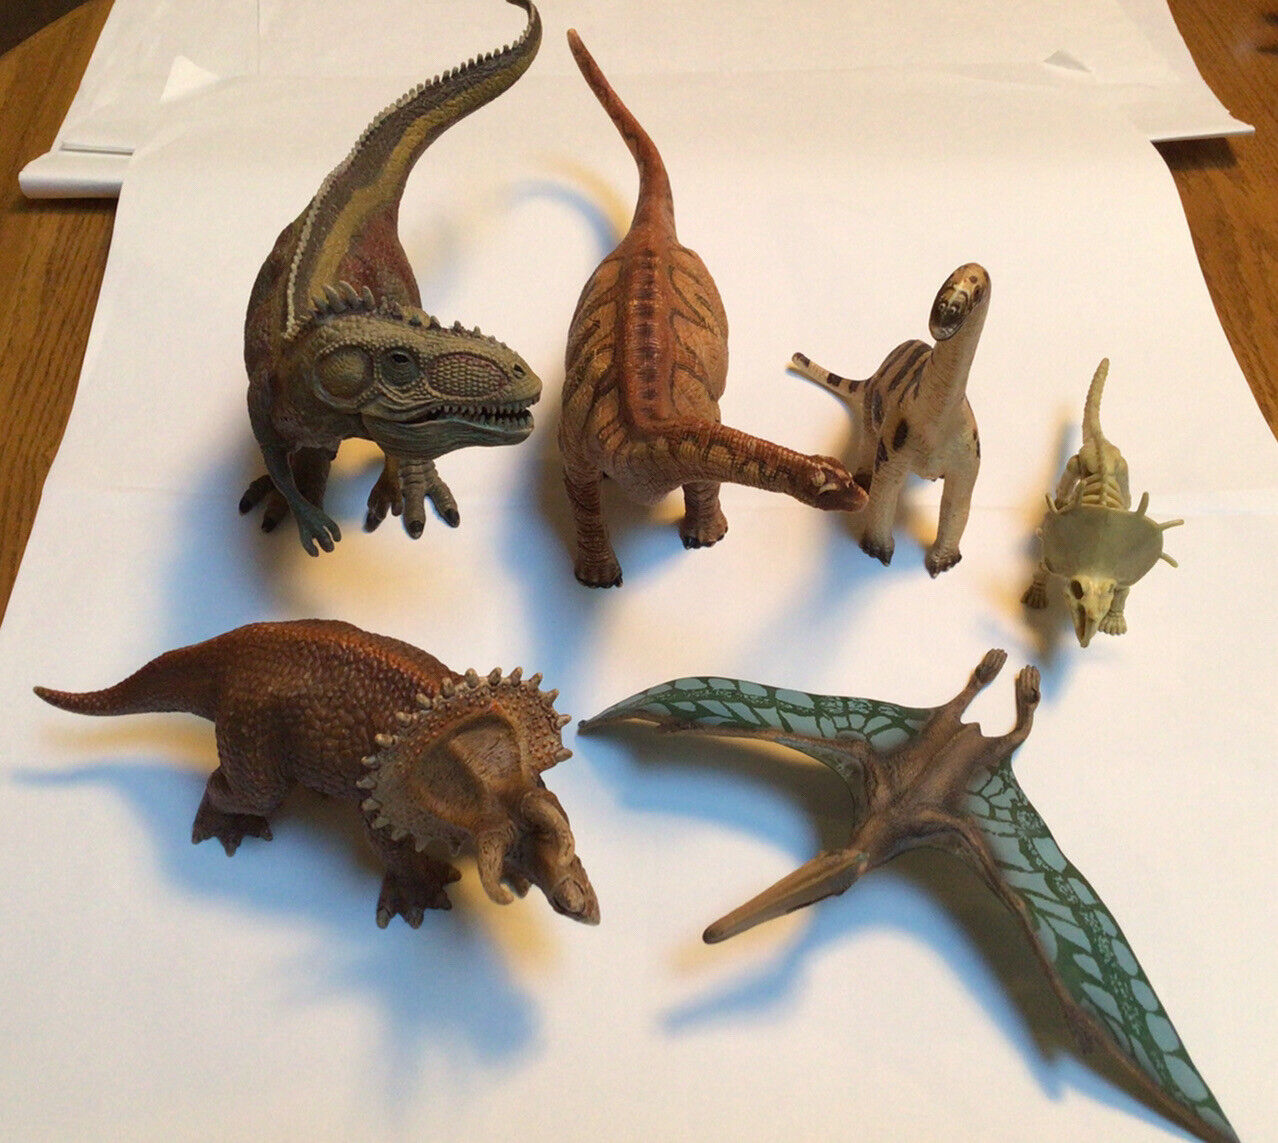 Schleich dinosaurs, Quetzalcoatlus, Giganotosaurs, Triceratops Plus two more